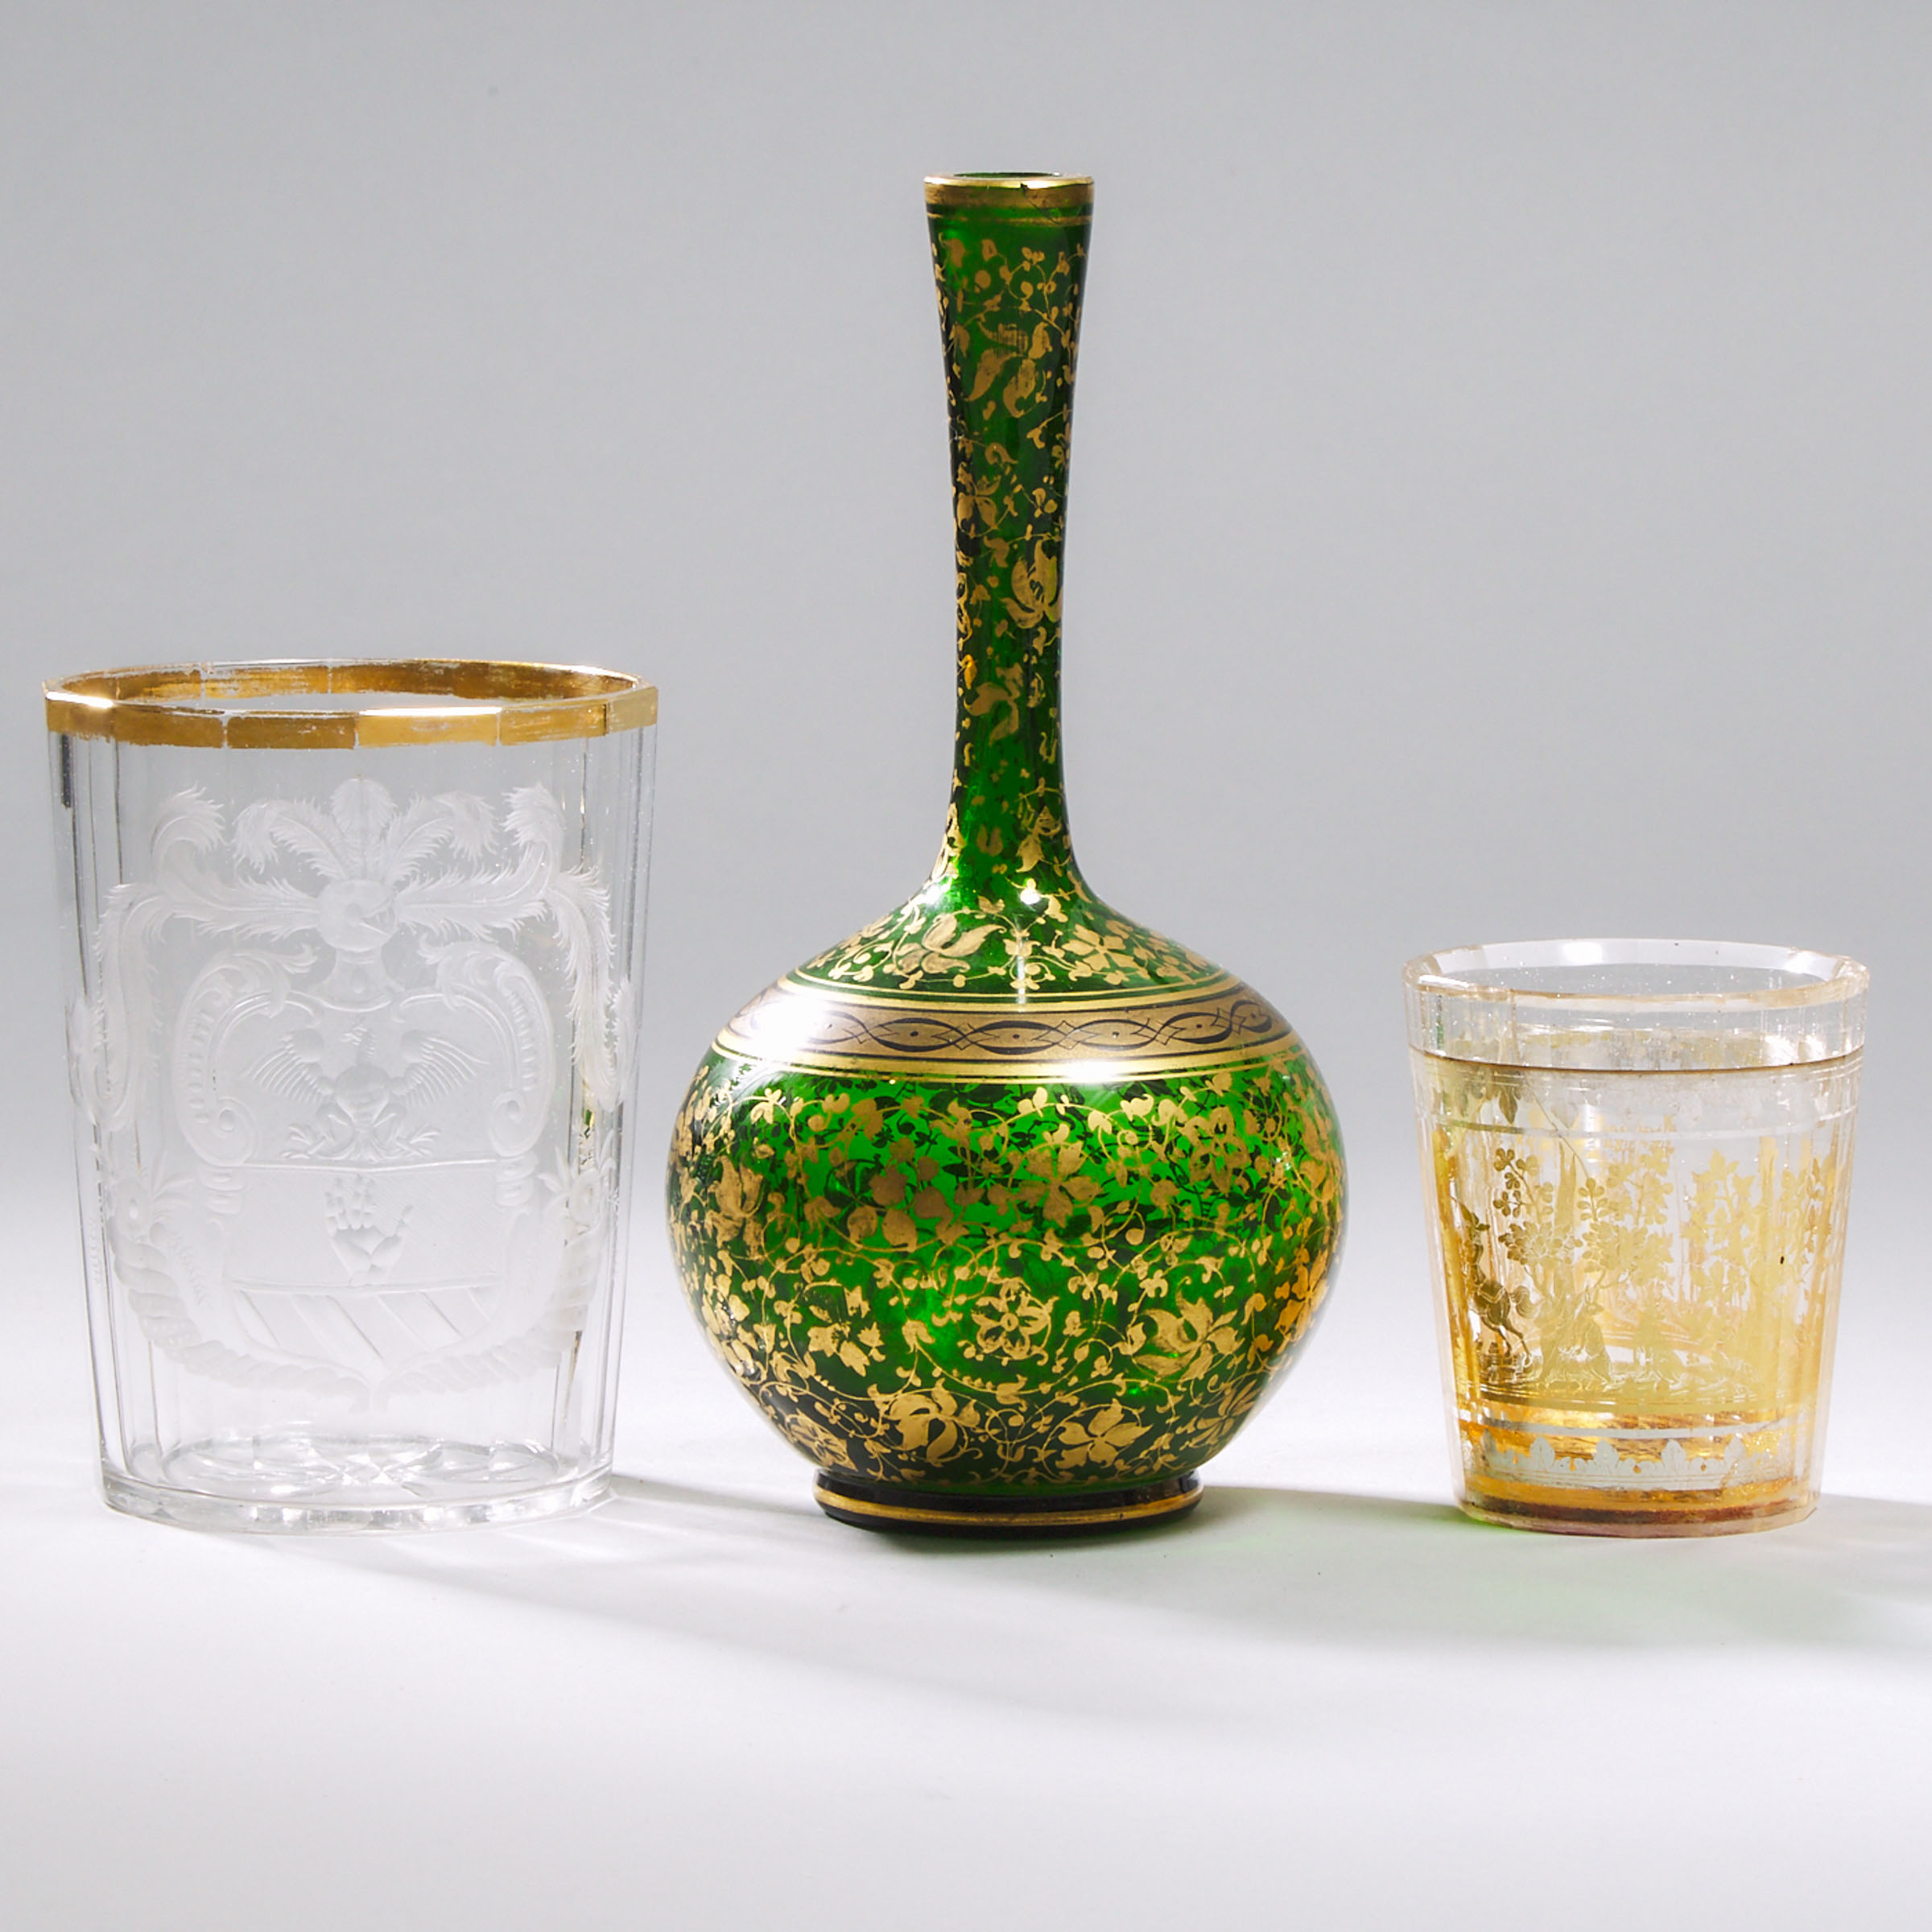 Bohemian Zwischengoldglas Small Beaker, Larger Armorial Beaker and a Gilt Green Glass Vase, 19th century